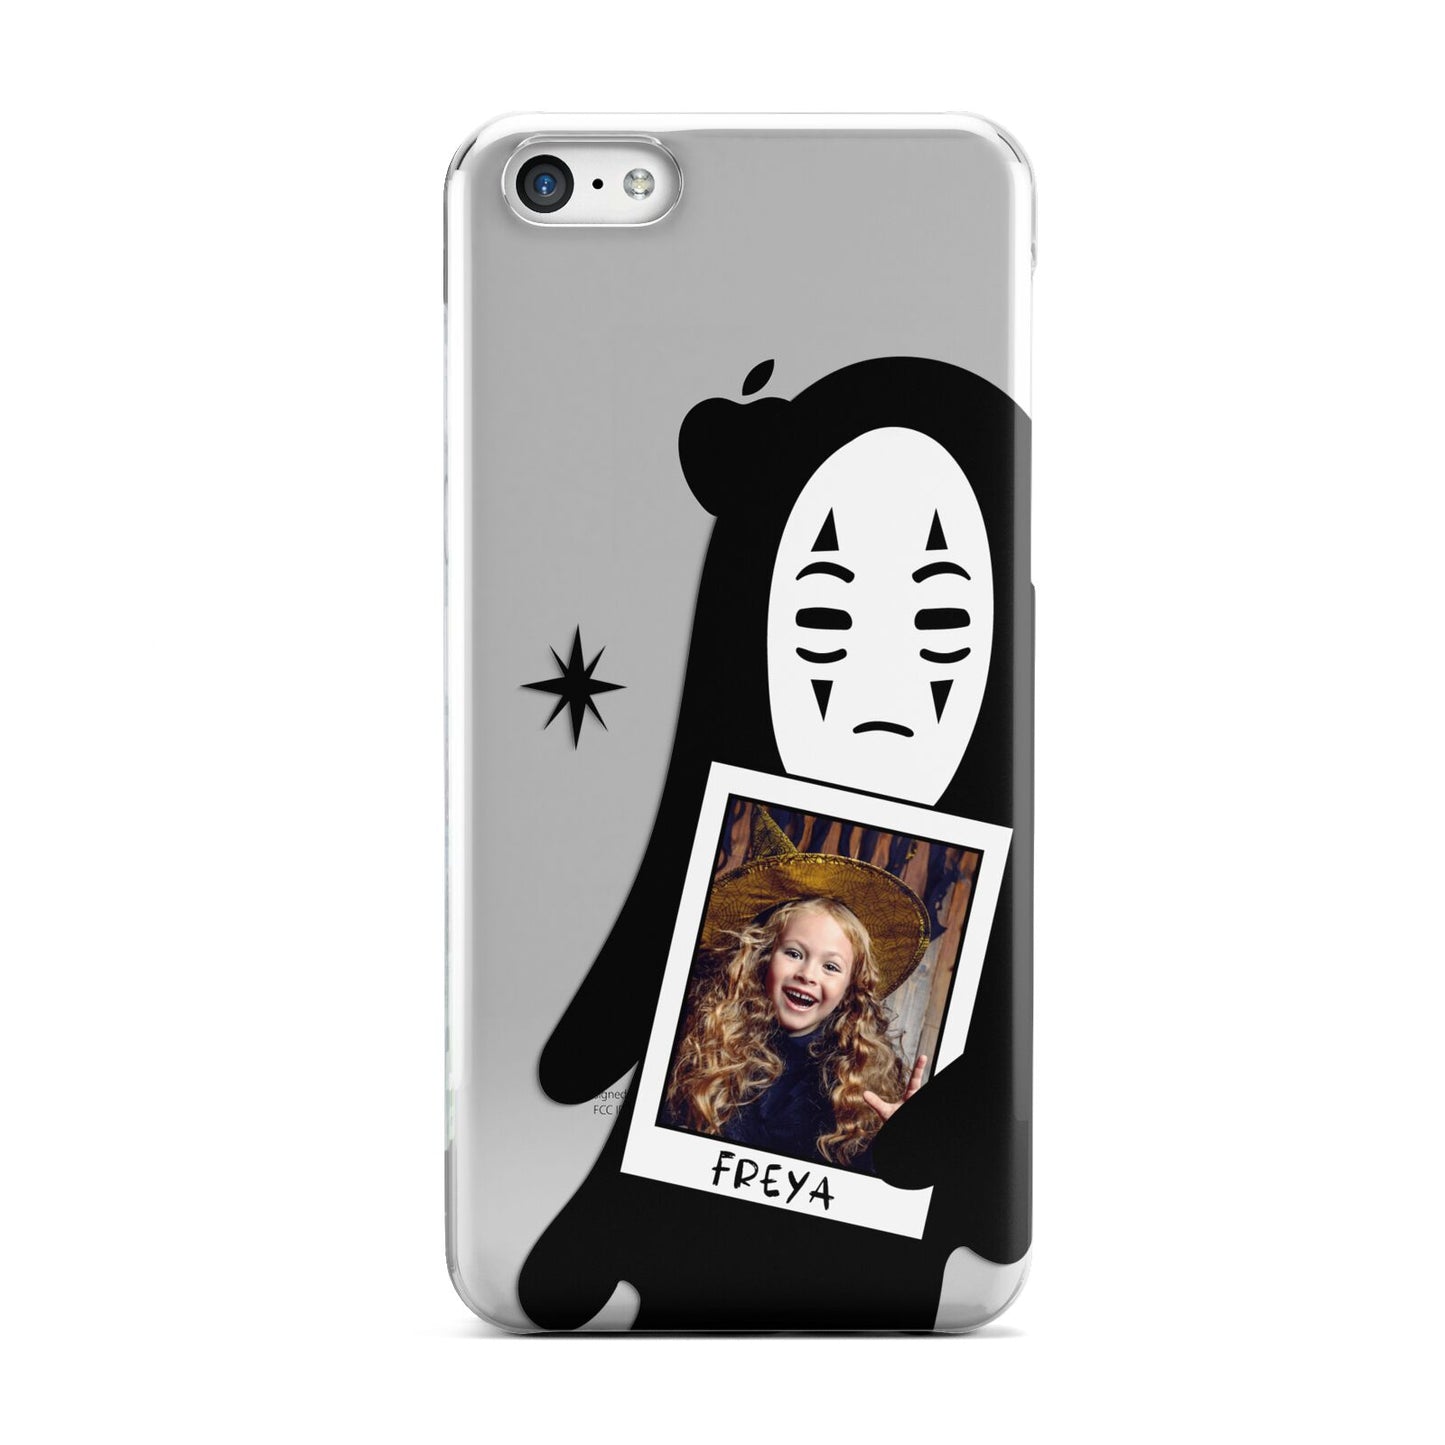 Ghostly Halloween Photo Apple iPhone 5c Case